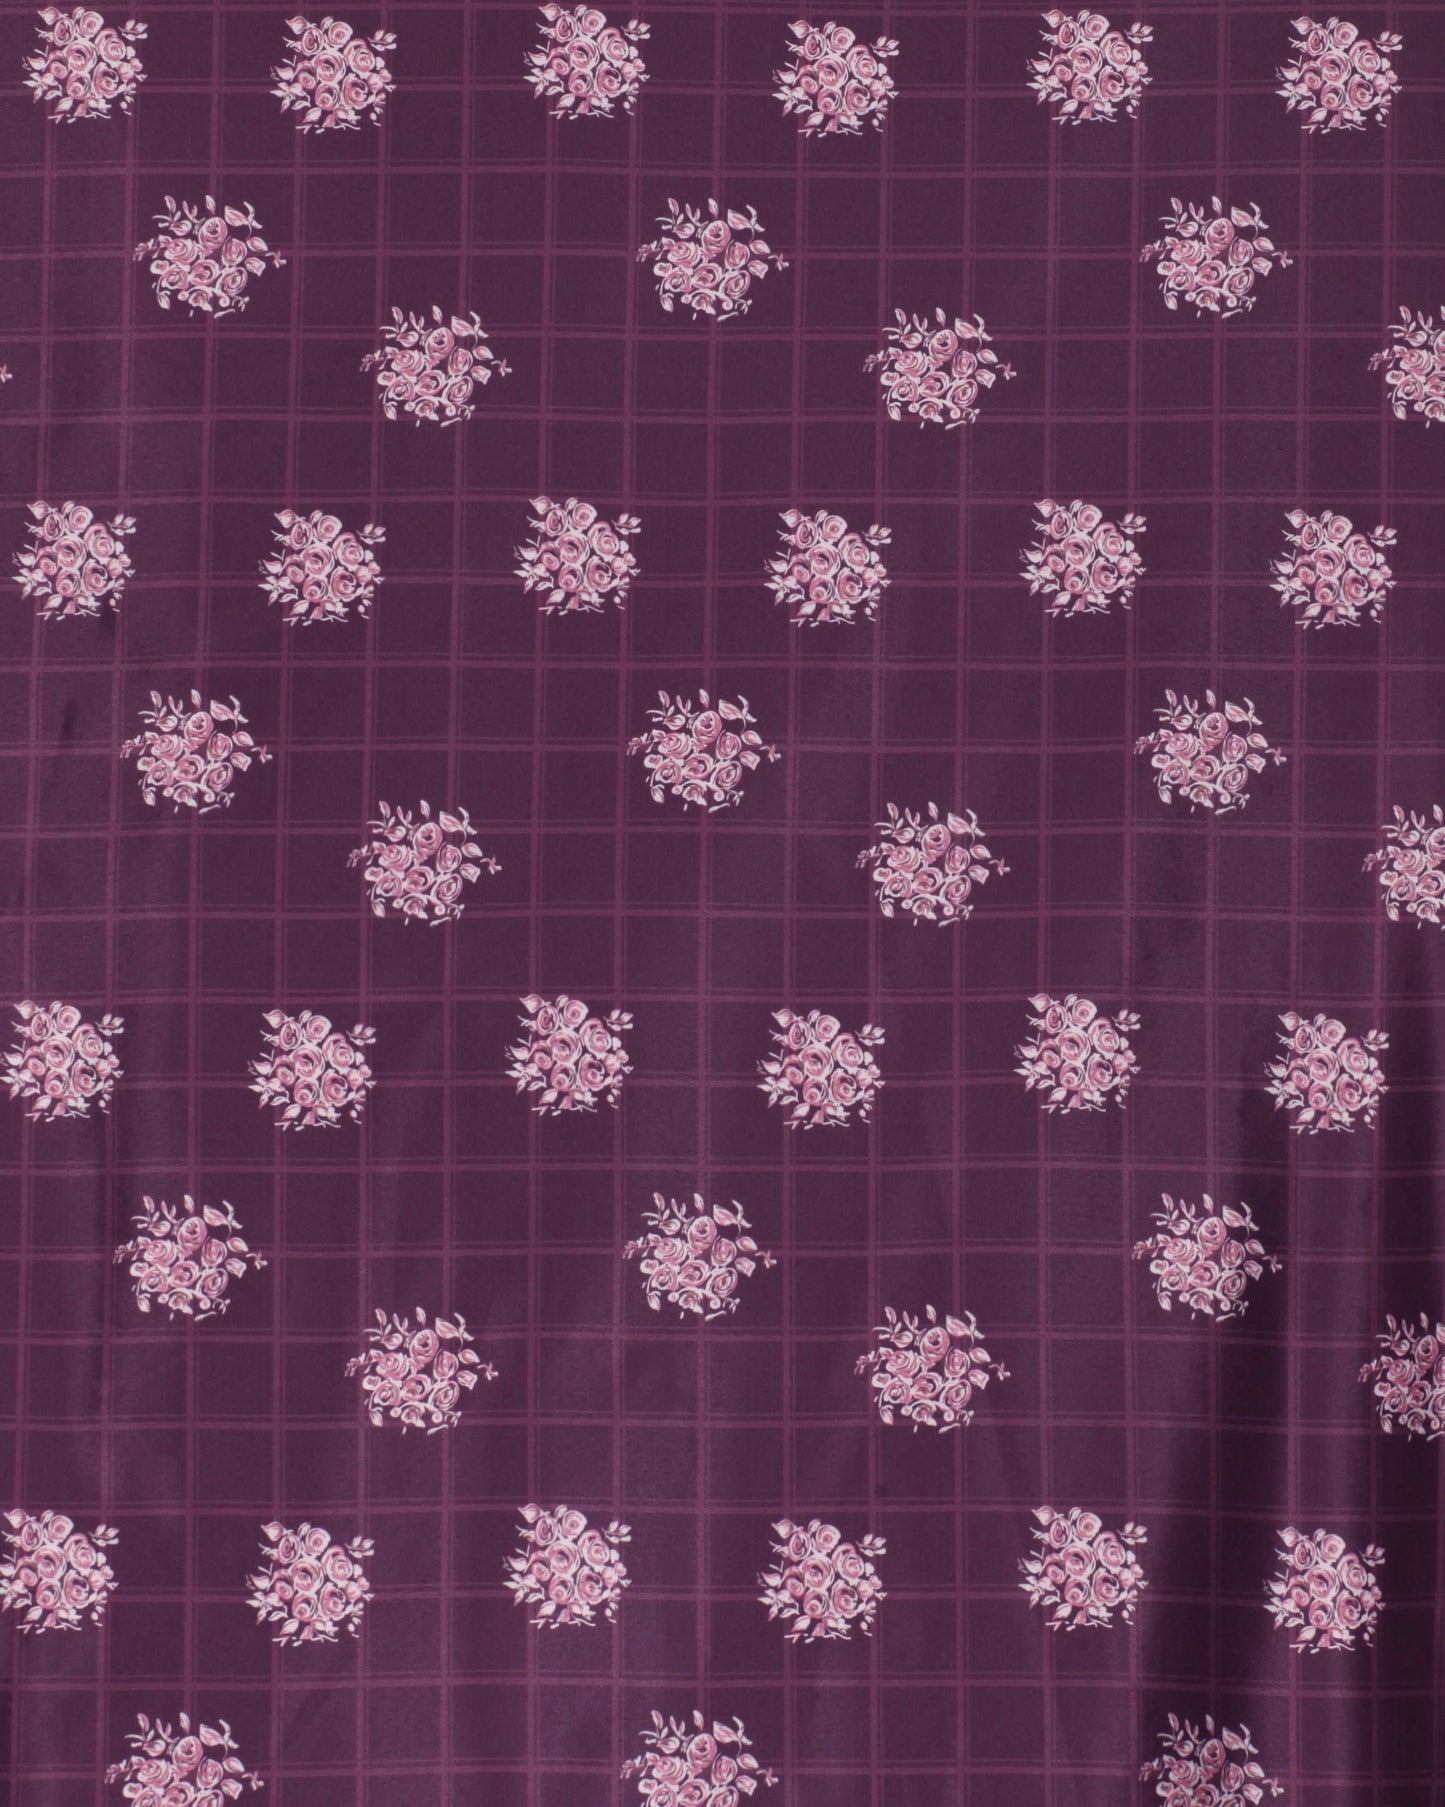 Lindy Bop 'Juno' Purple Rose Check Print Vintage 70s Boho Maxi Shirt Dress